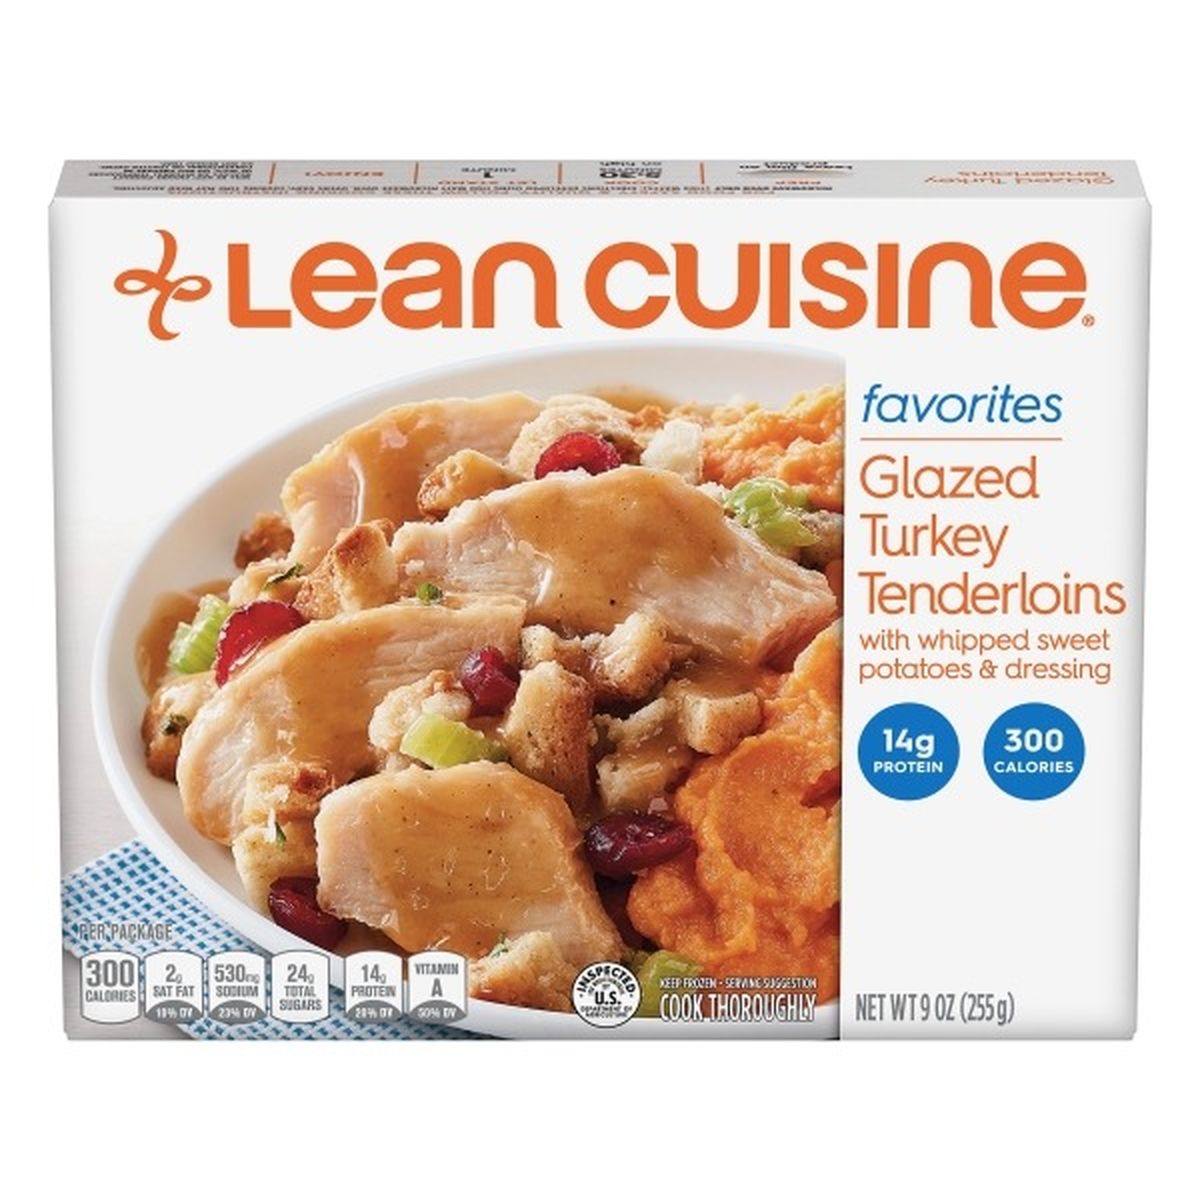 Calories in Lean Cuisine Glazed Turkey Tenderloins